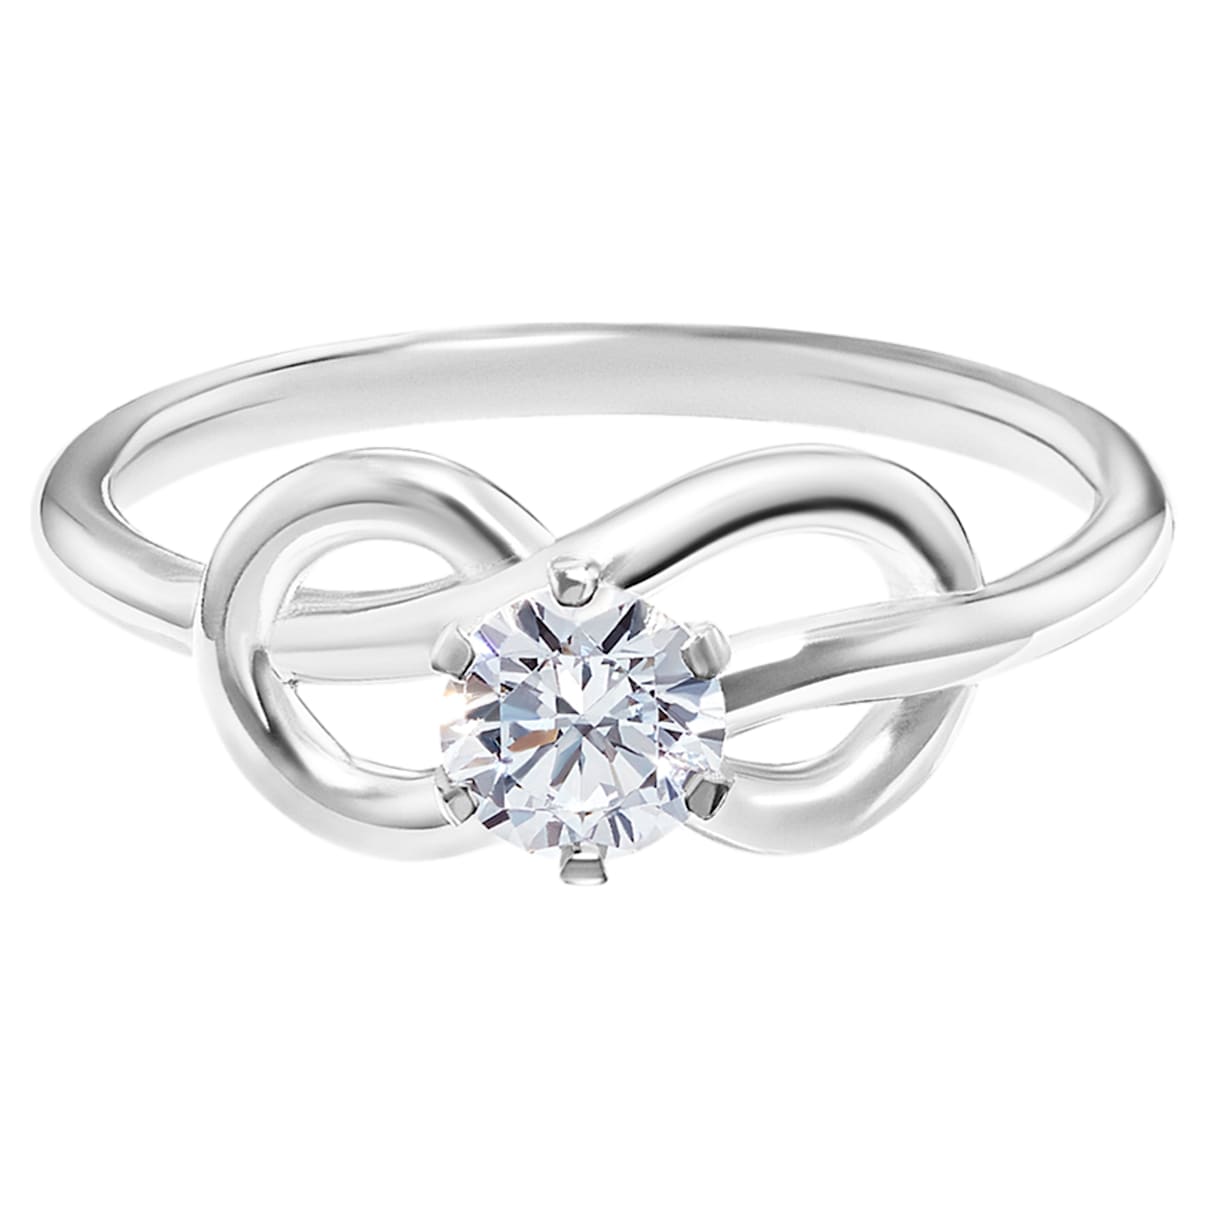 Knot of True Love Savoy Ring 0.25ct, Swarovski Created Diamonds, 18K White Gold, Size 55